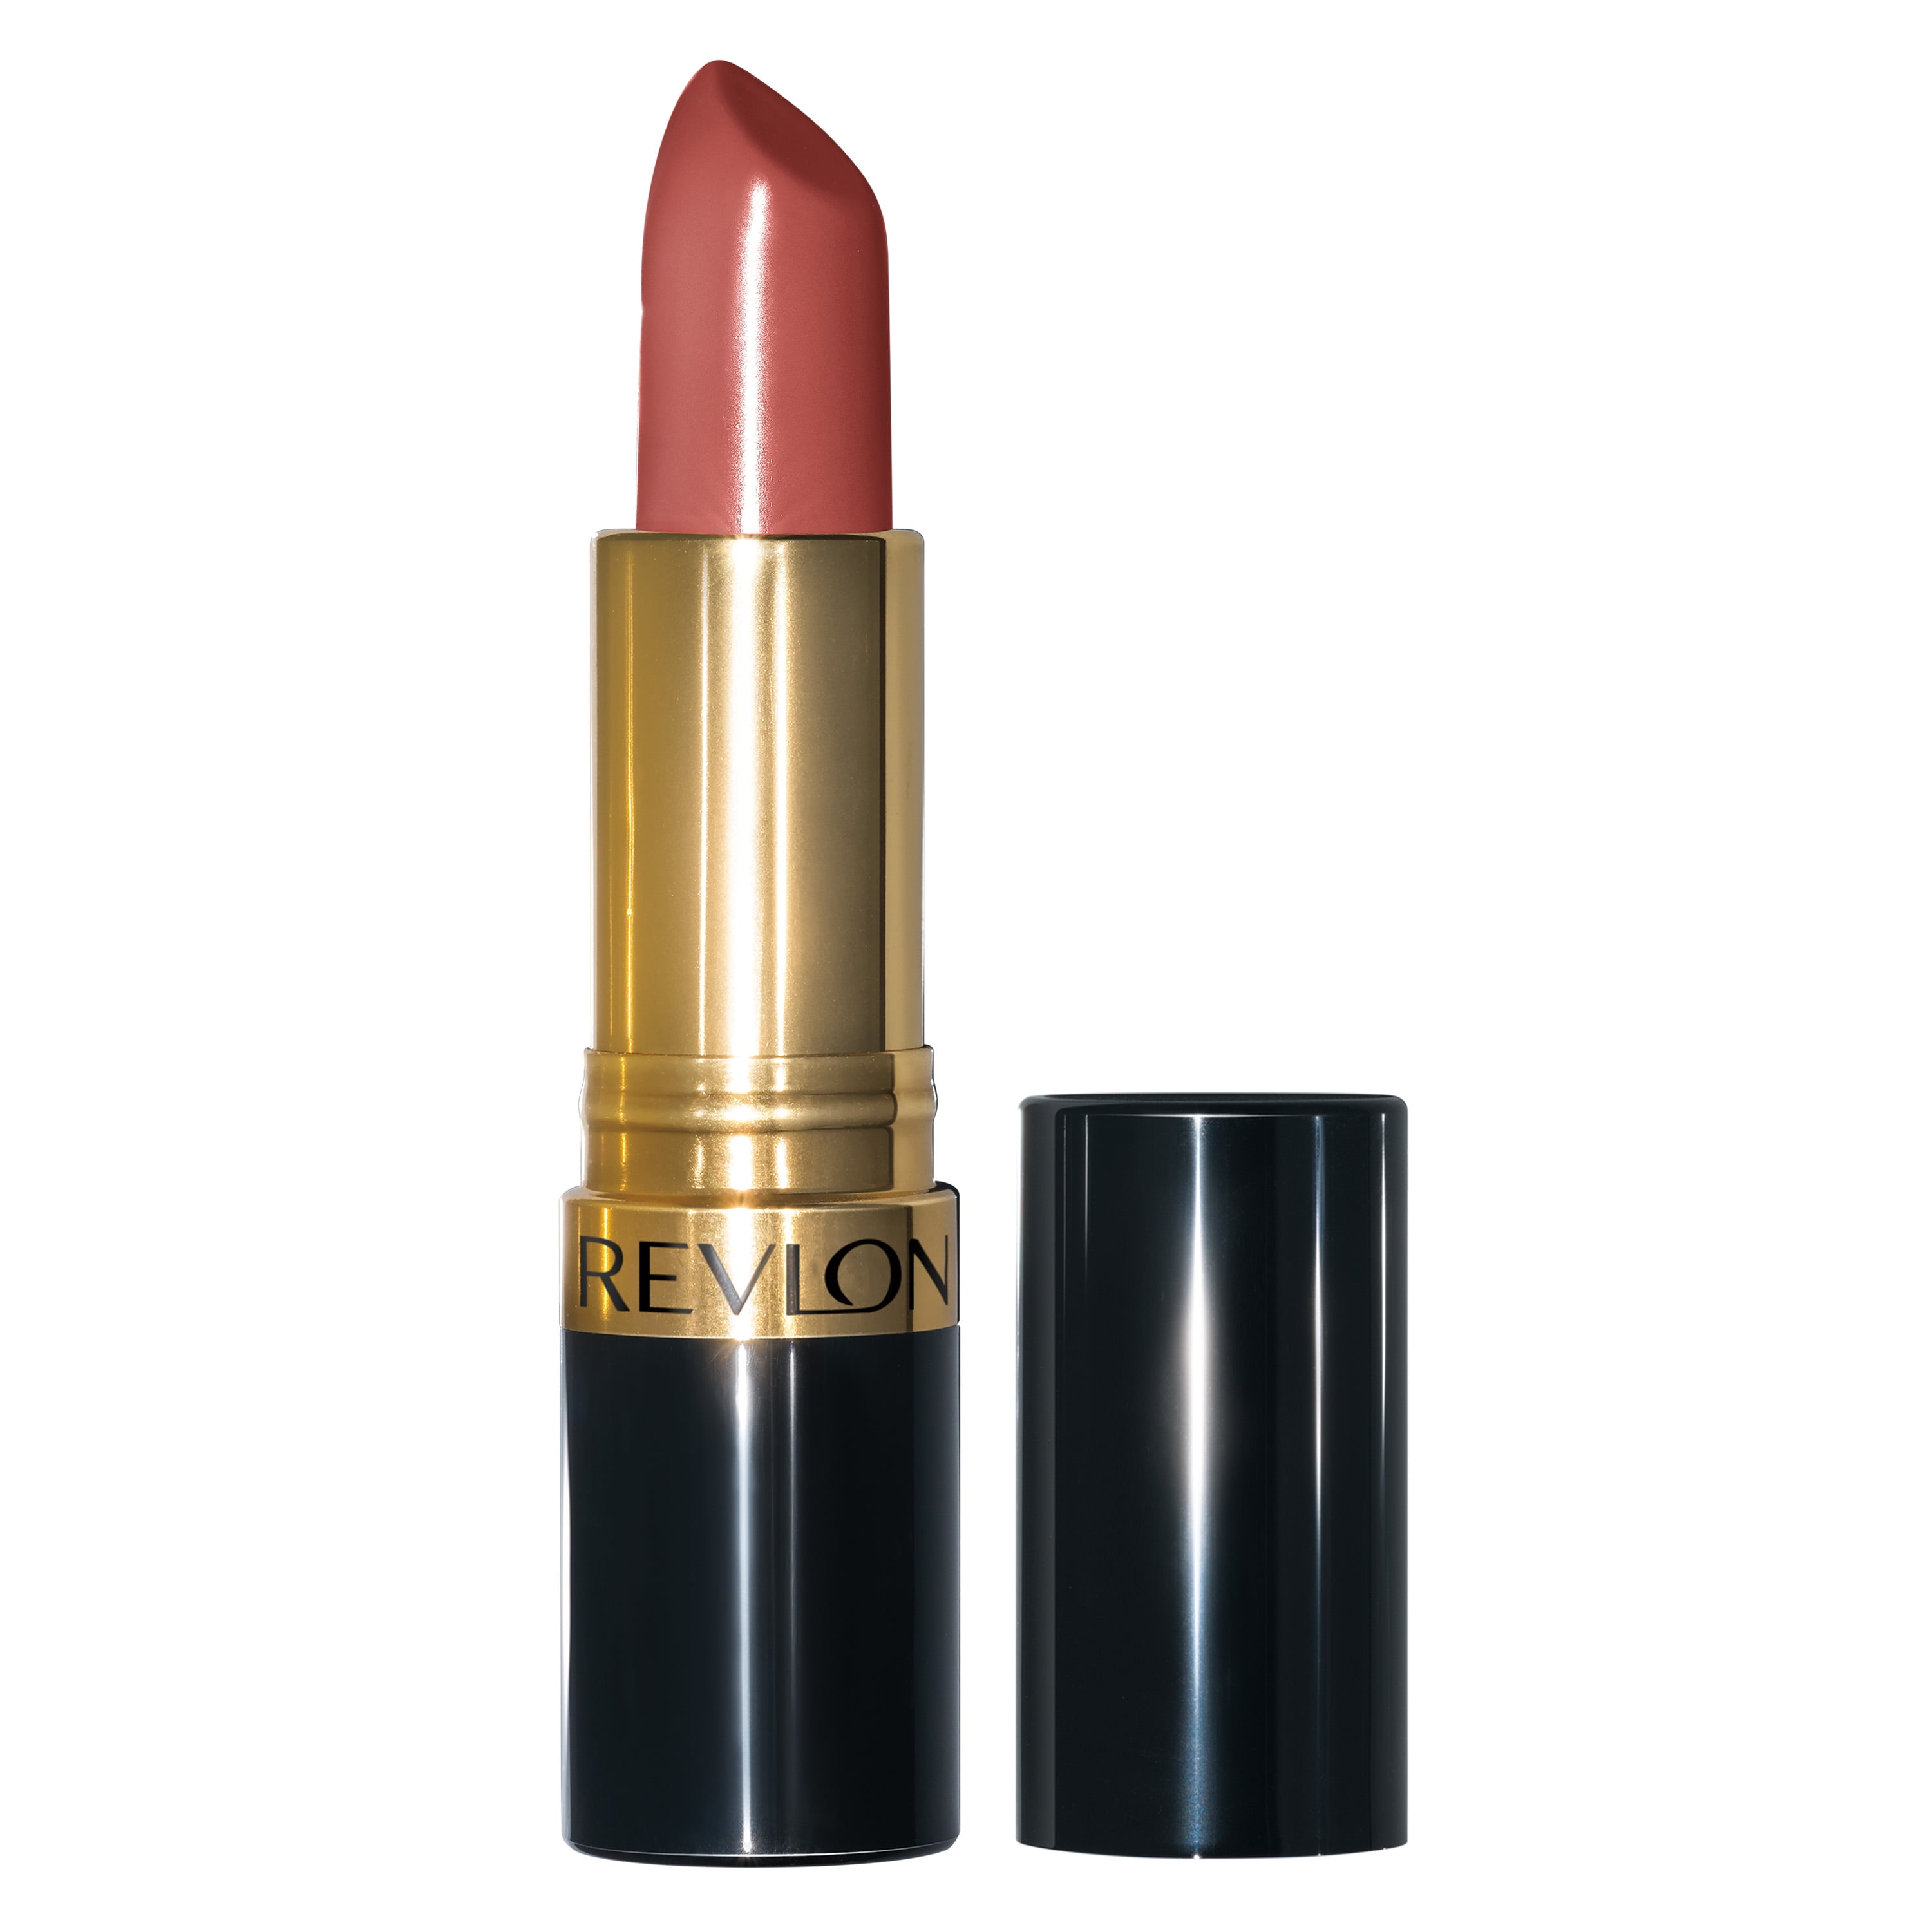 Revlon Super Lustrous Lipstick, Cream Finish, High Impact Lipcolor with Moisturizing Creamy Formula, Infused with Vitamin E and Avocado Oil, 325 Toast of New York, 0.15 oz